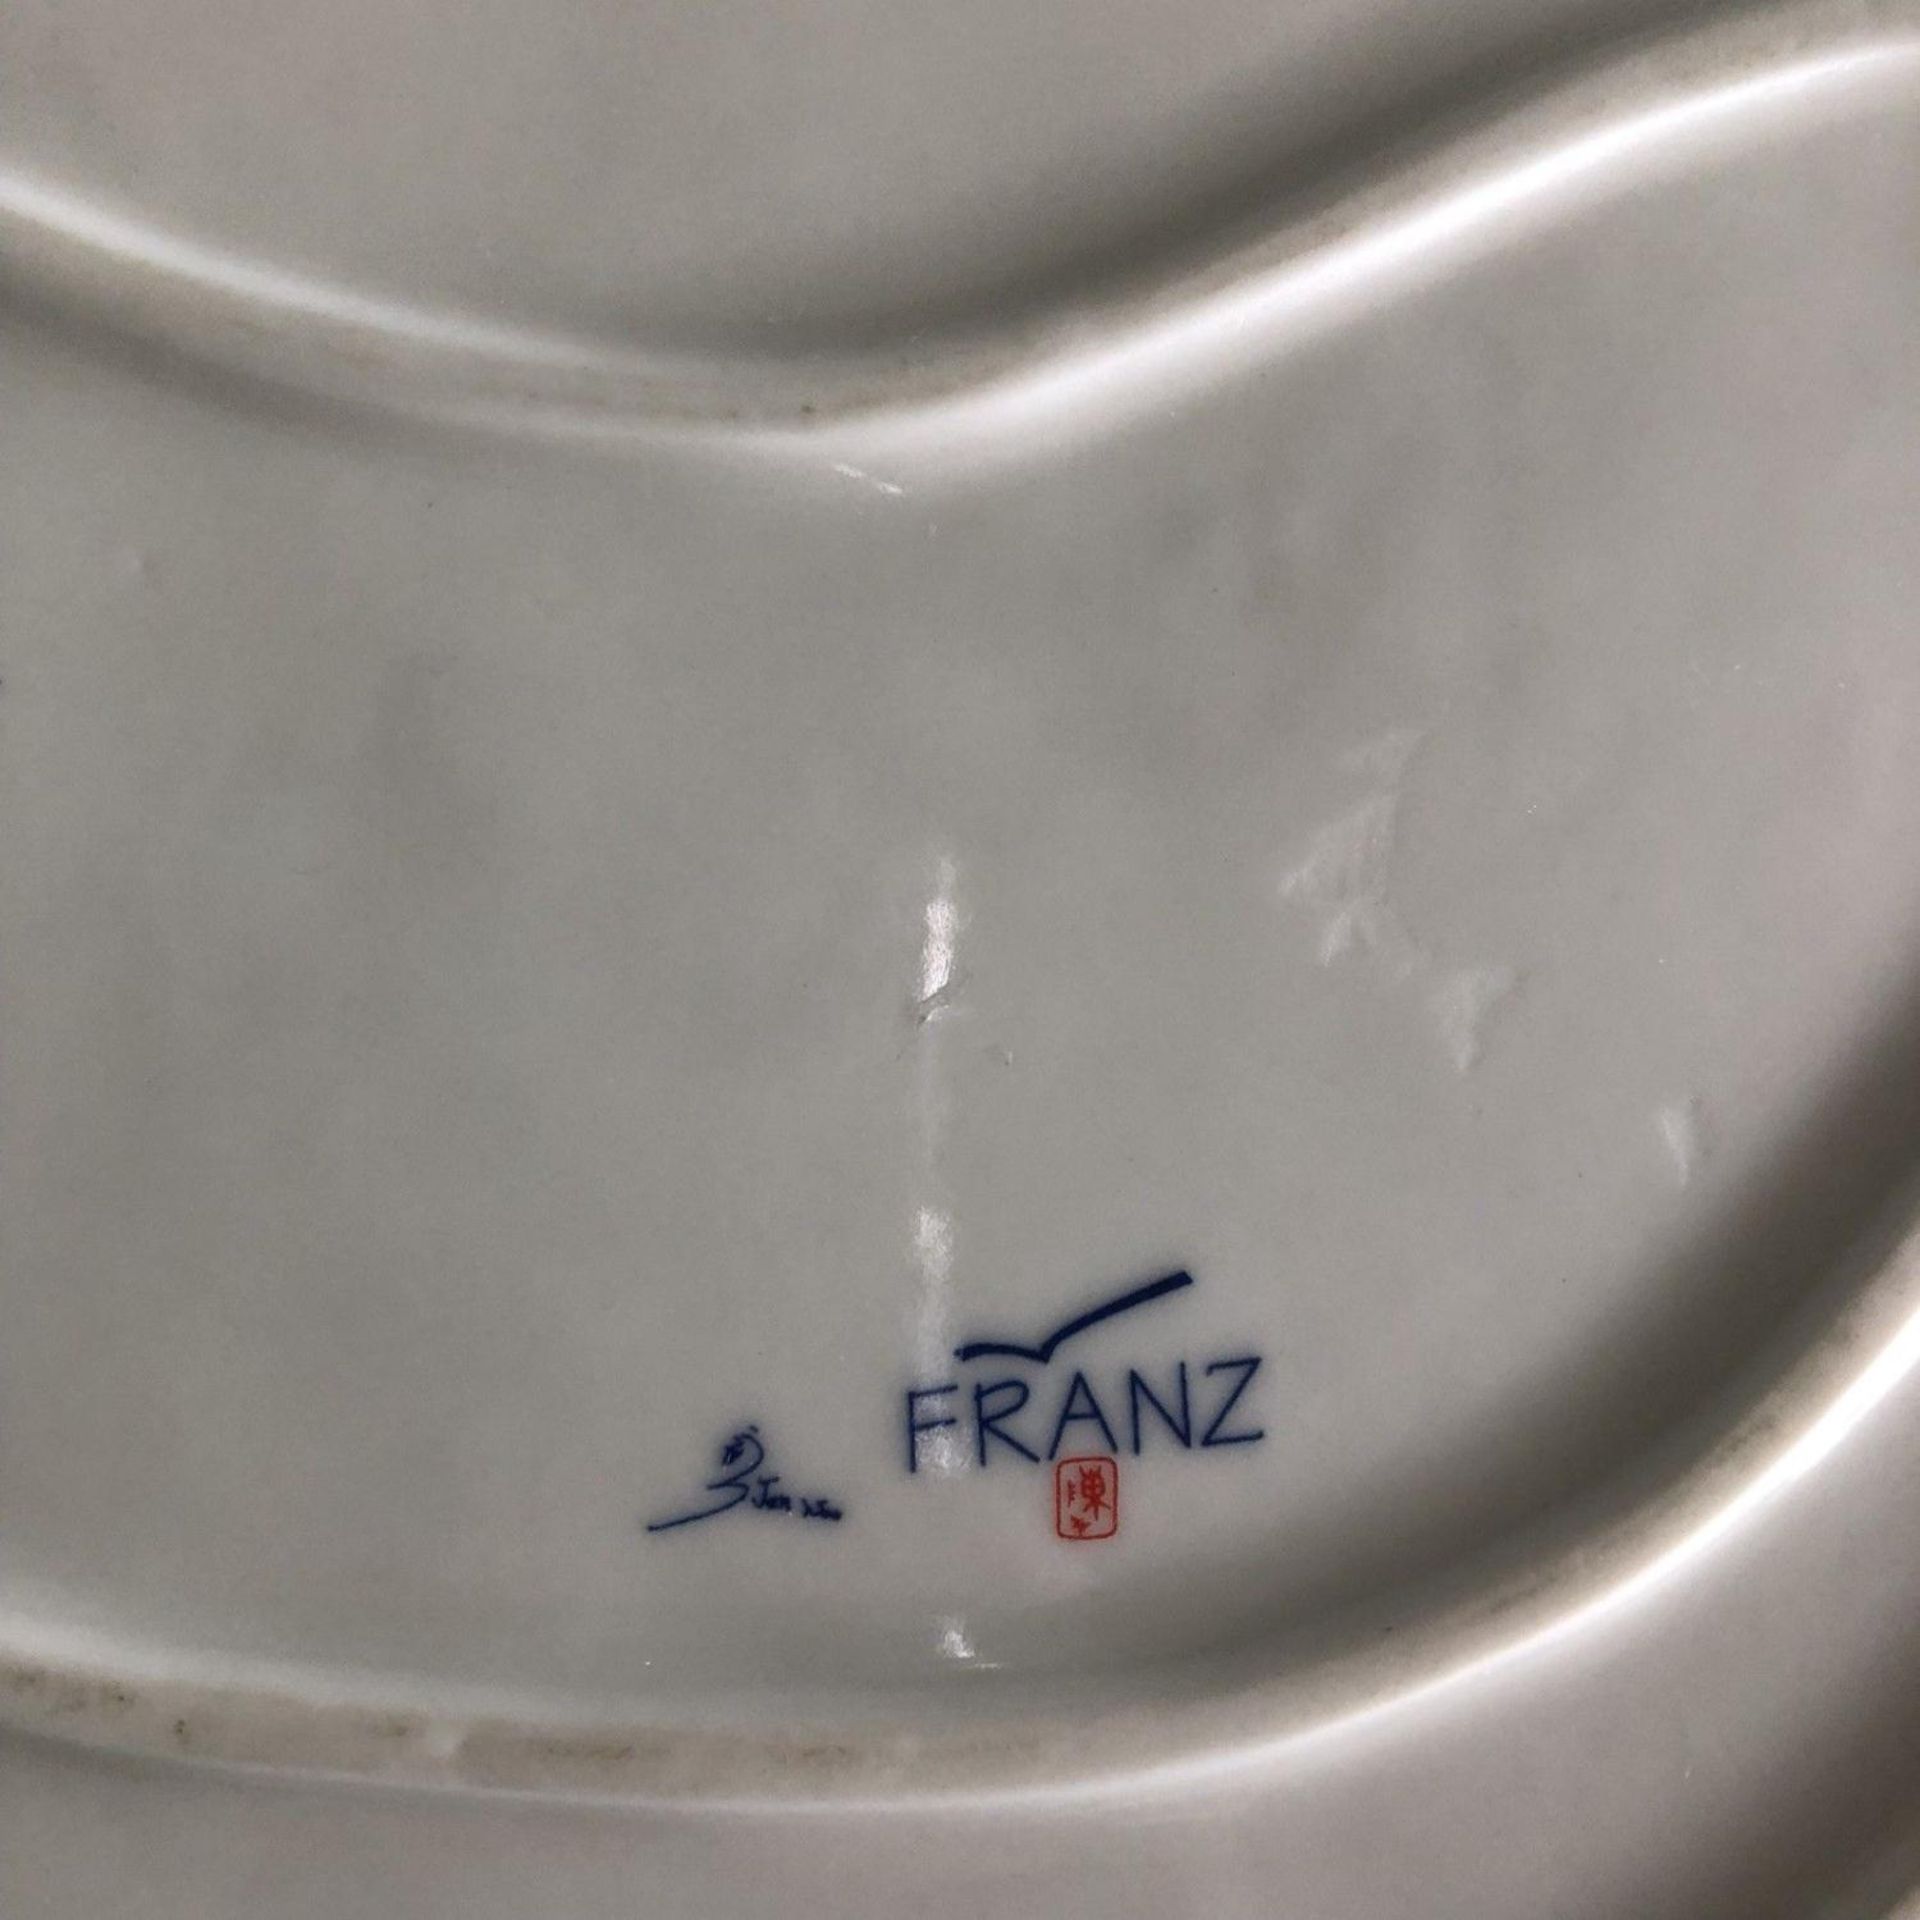 Signed Jen Woo Franz Dragonfly & Corn Wheat Decoration Porcelain Sandwich Plate - Image 5 of 5